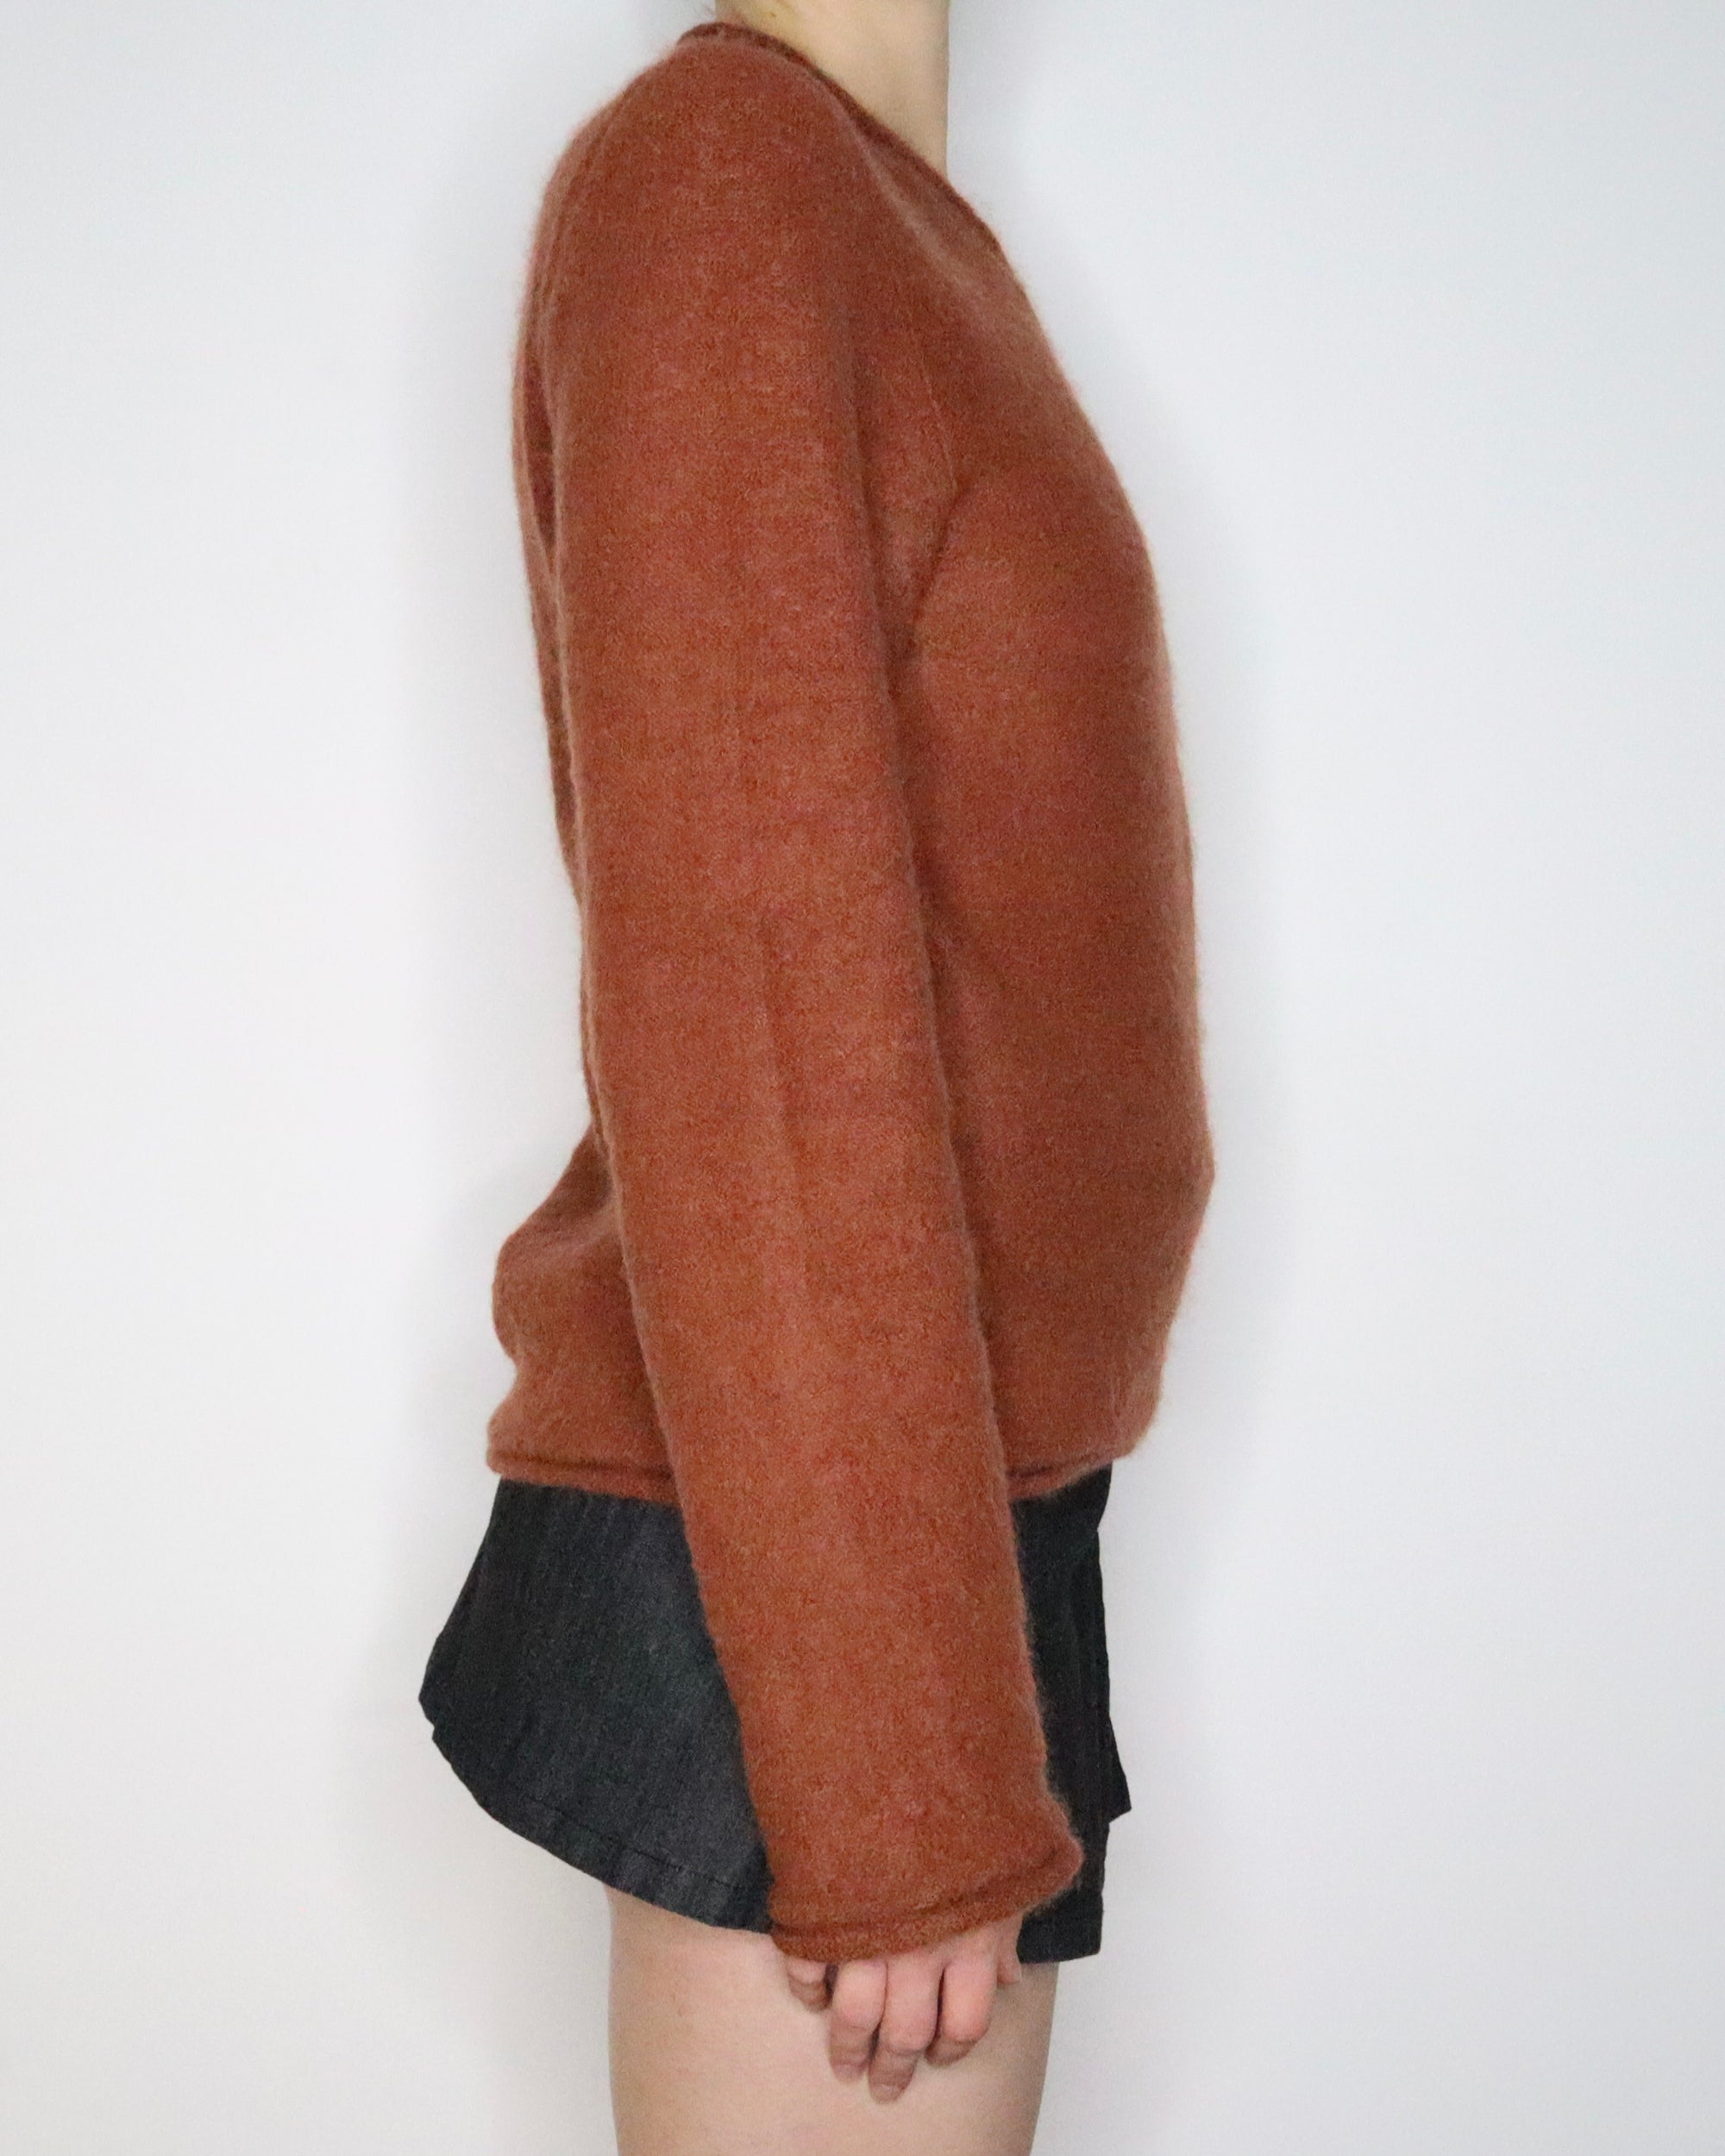 Cavalli Rust Mohair Sweater (L-XL) 